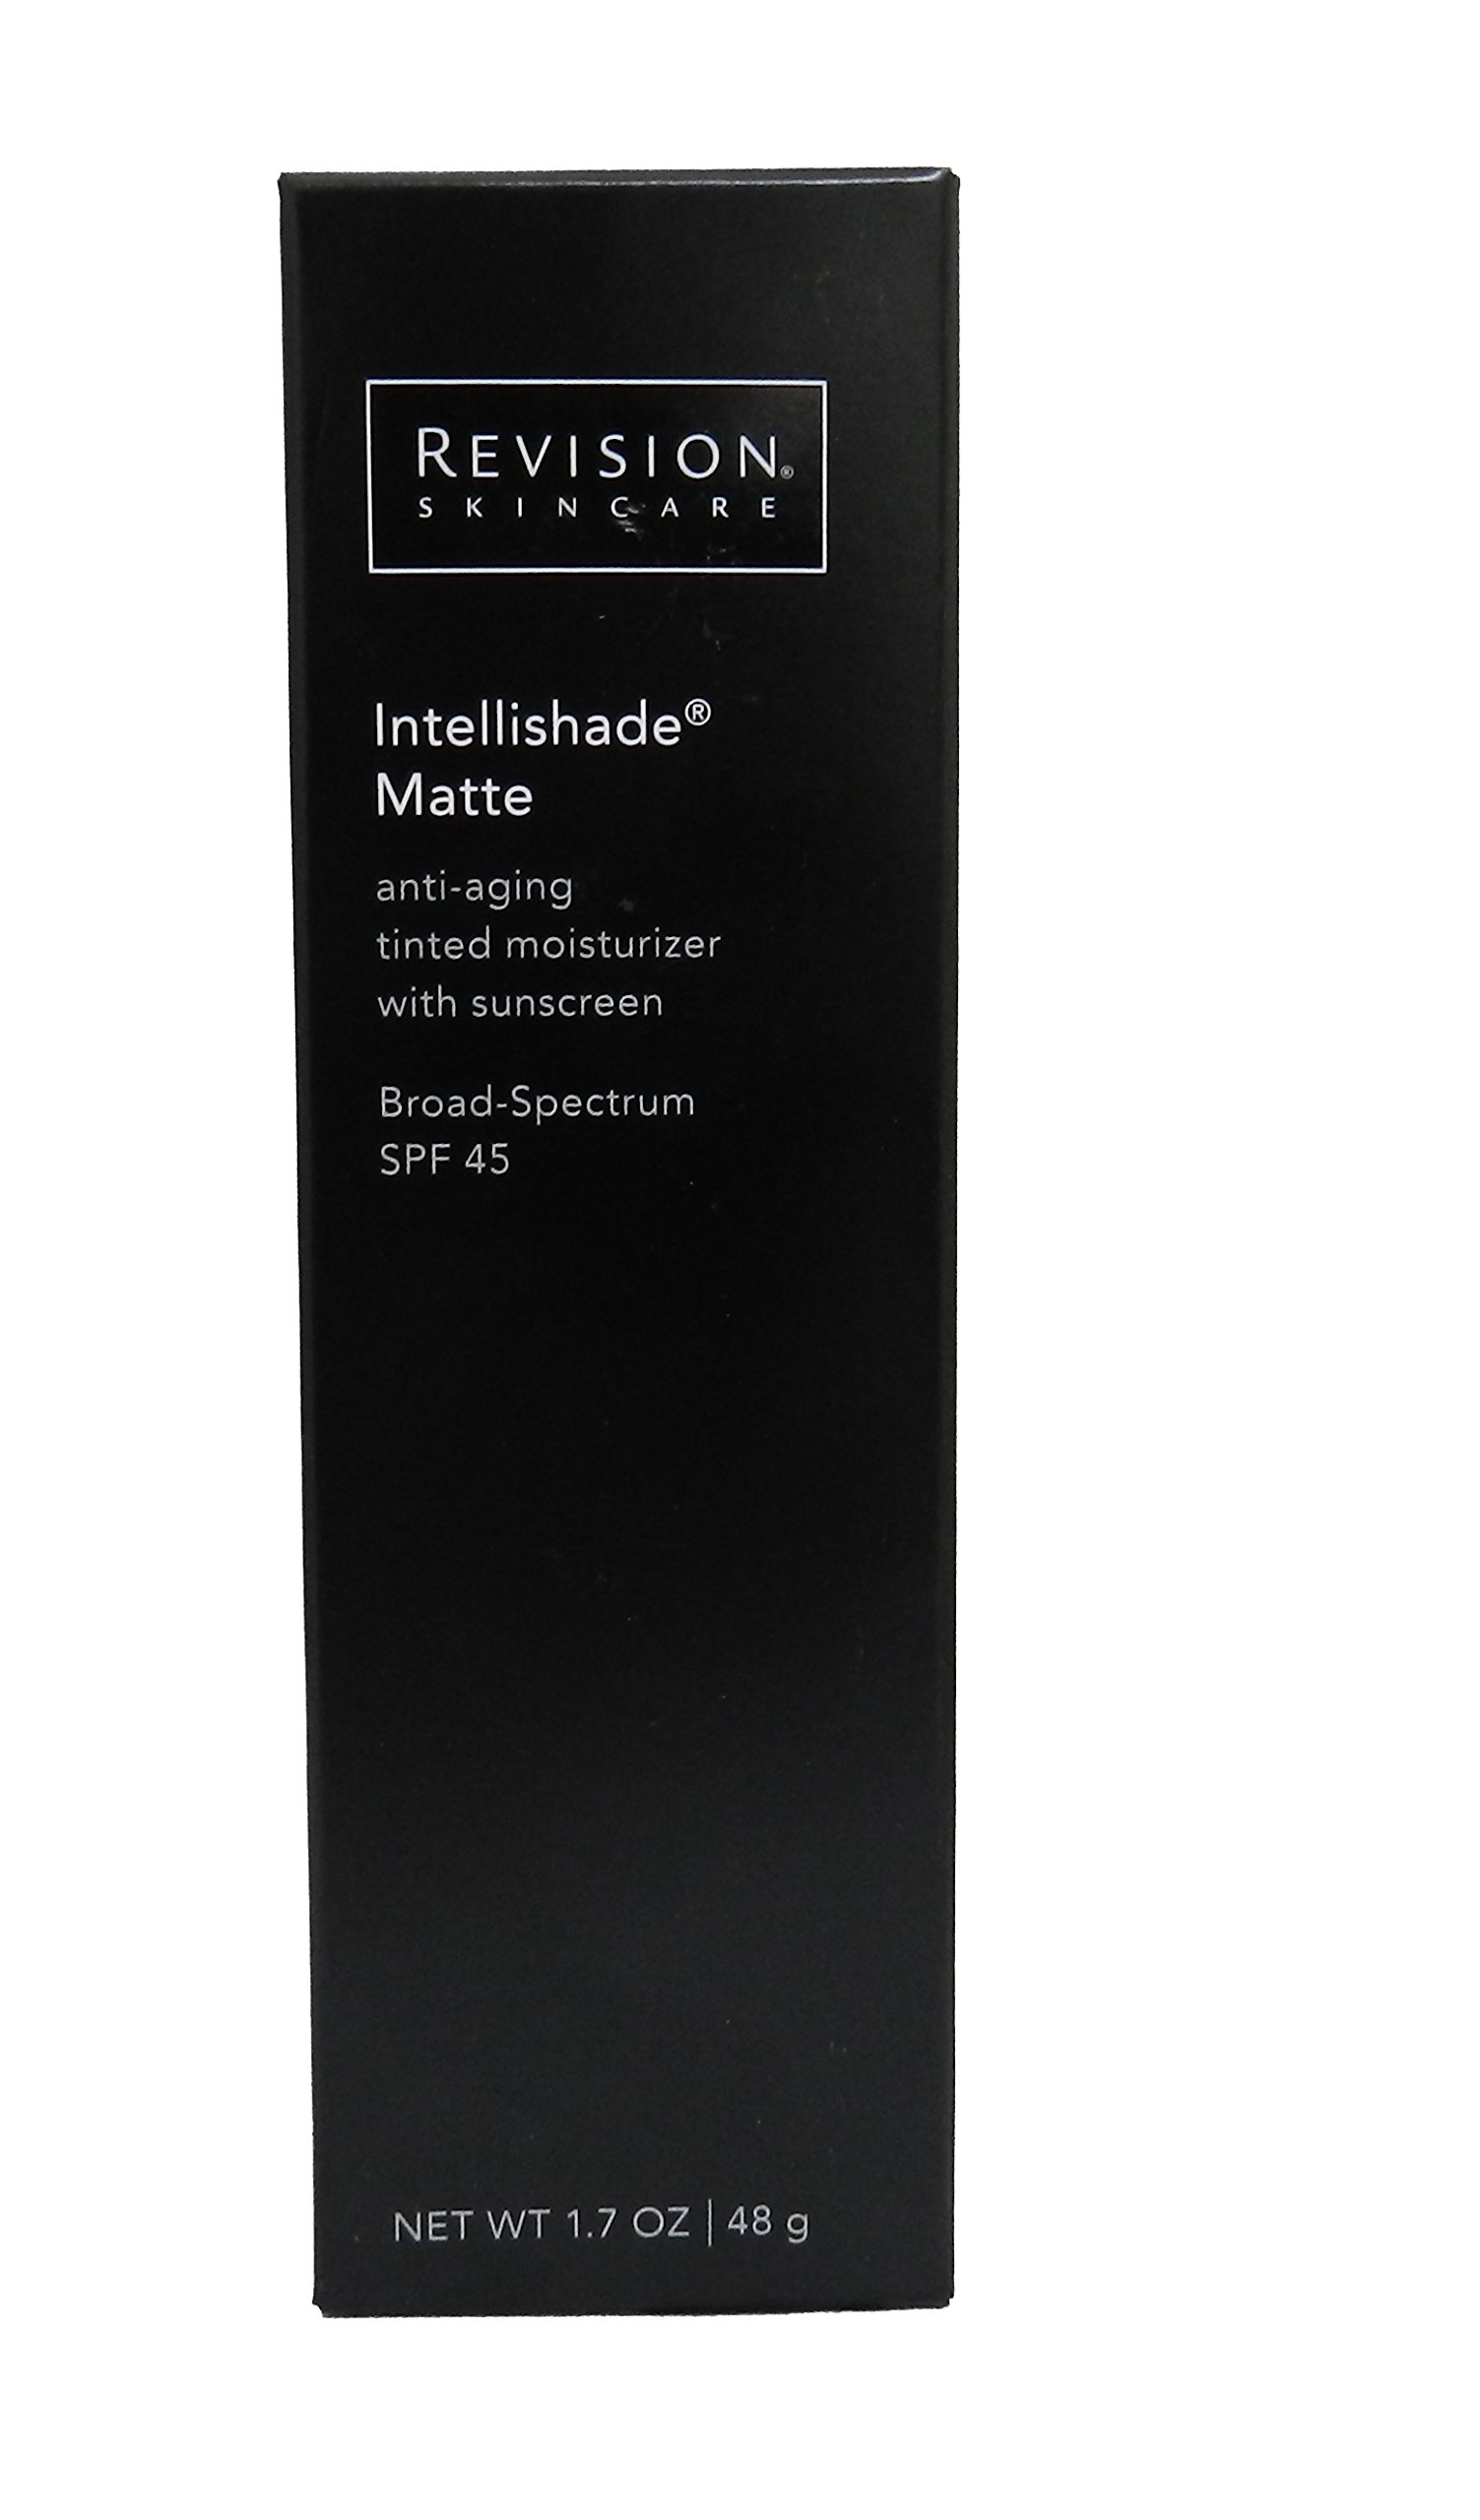 Revision Skincare Intellishade Matte Tinted Moisturizer SPF 45, 1.7 oz